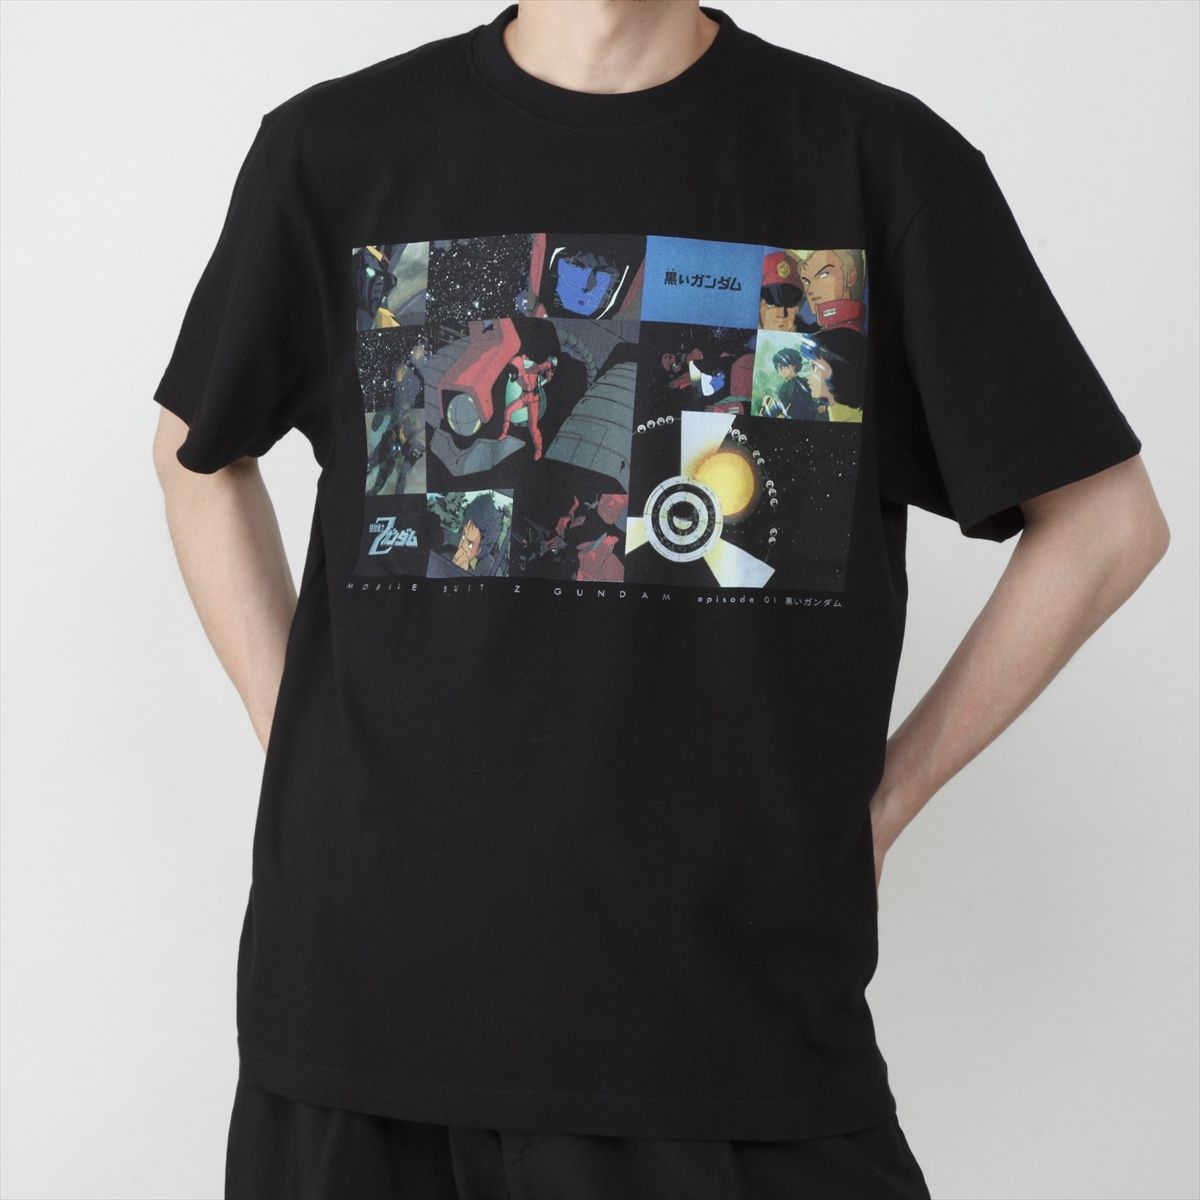 The Black Gundam T-shirt—Mobile Suit Zeta Gundam